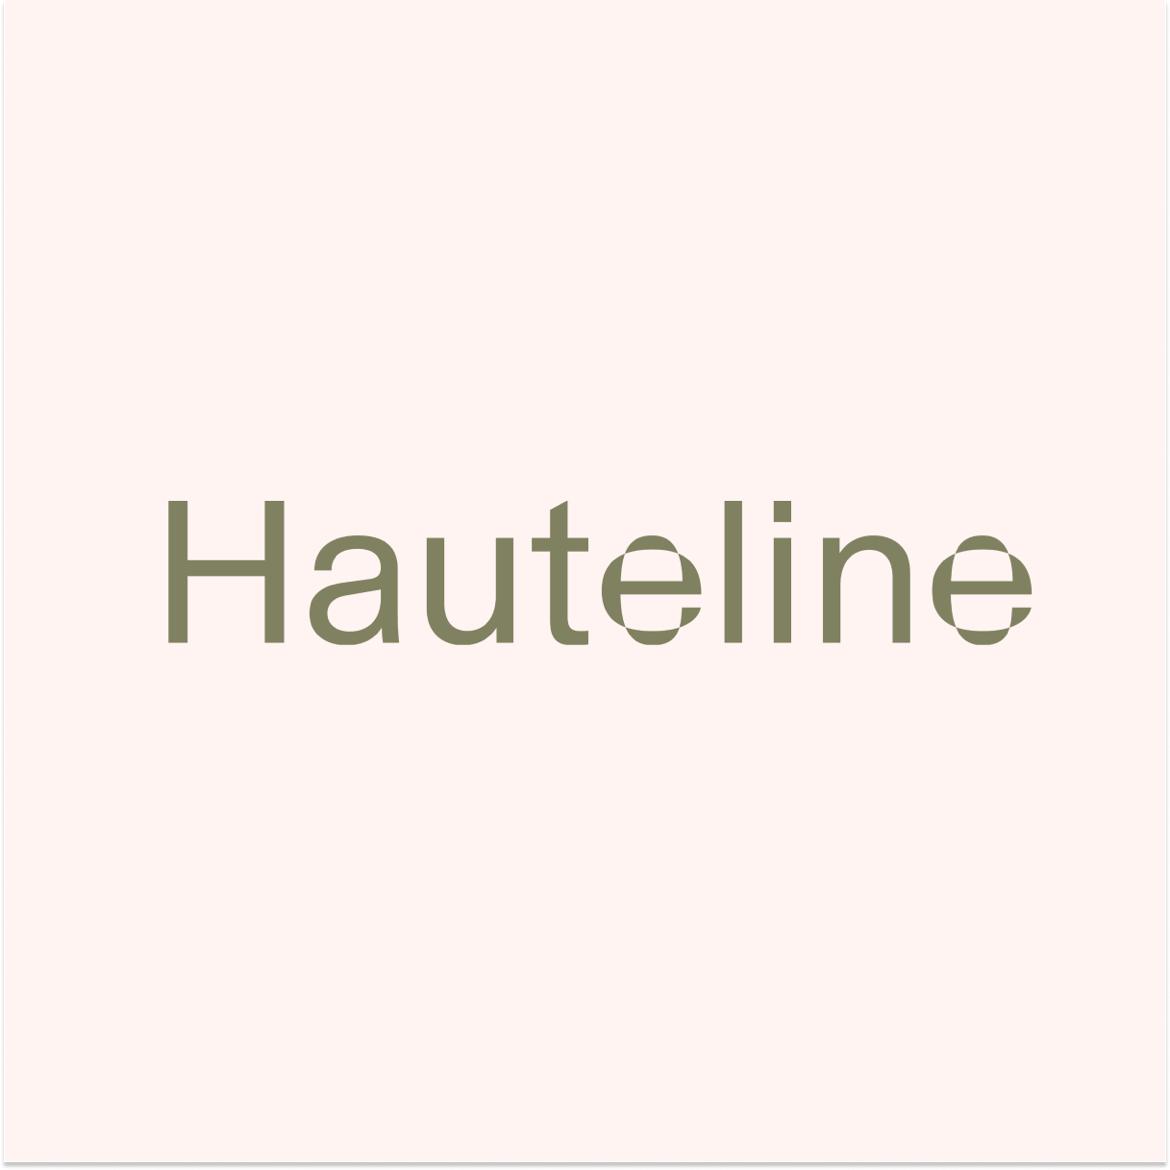 Hauteline